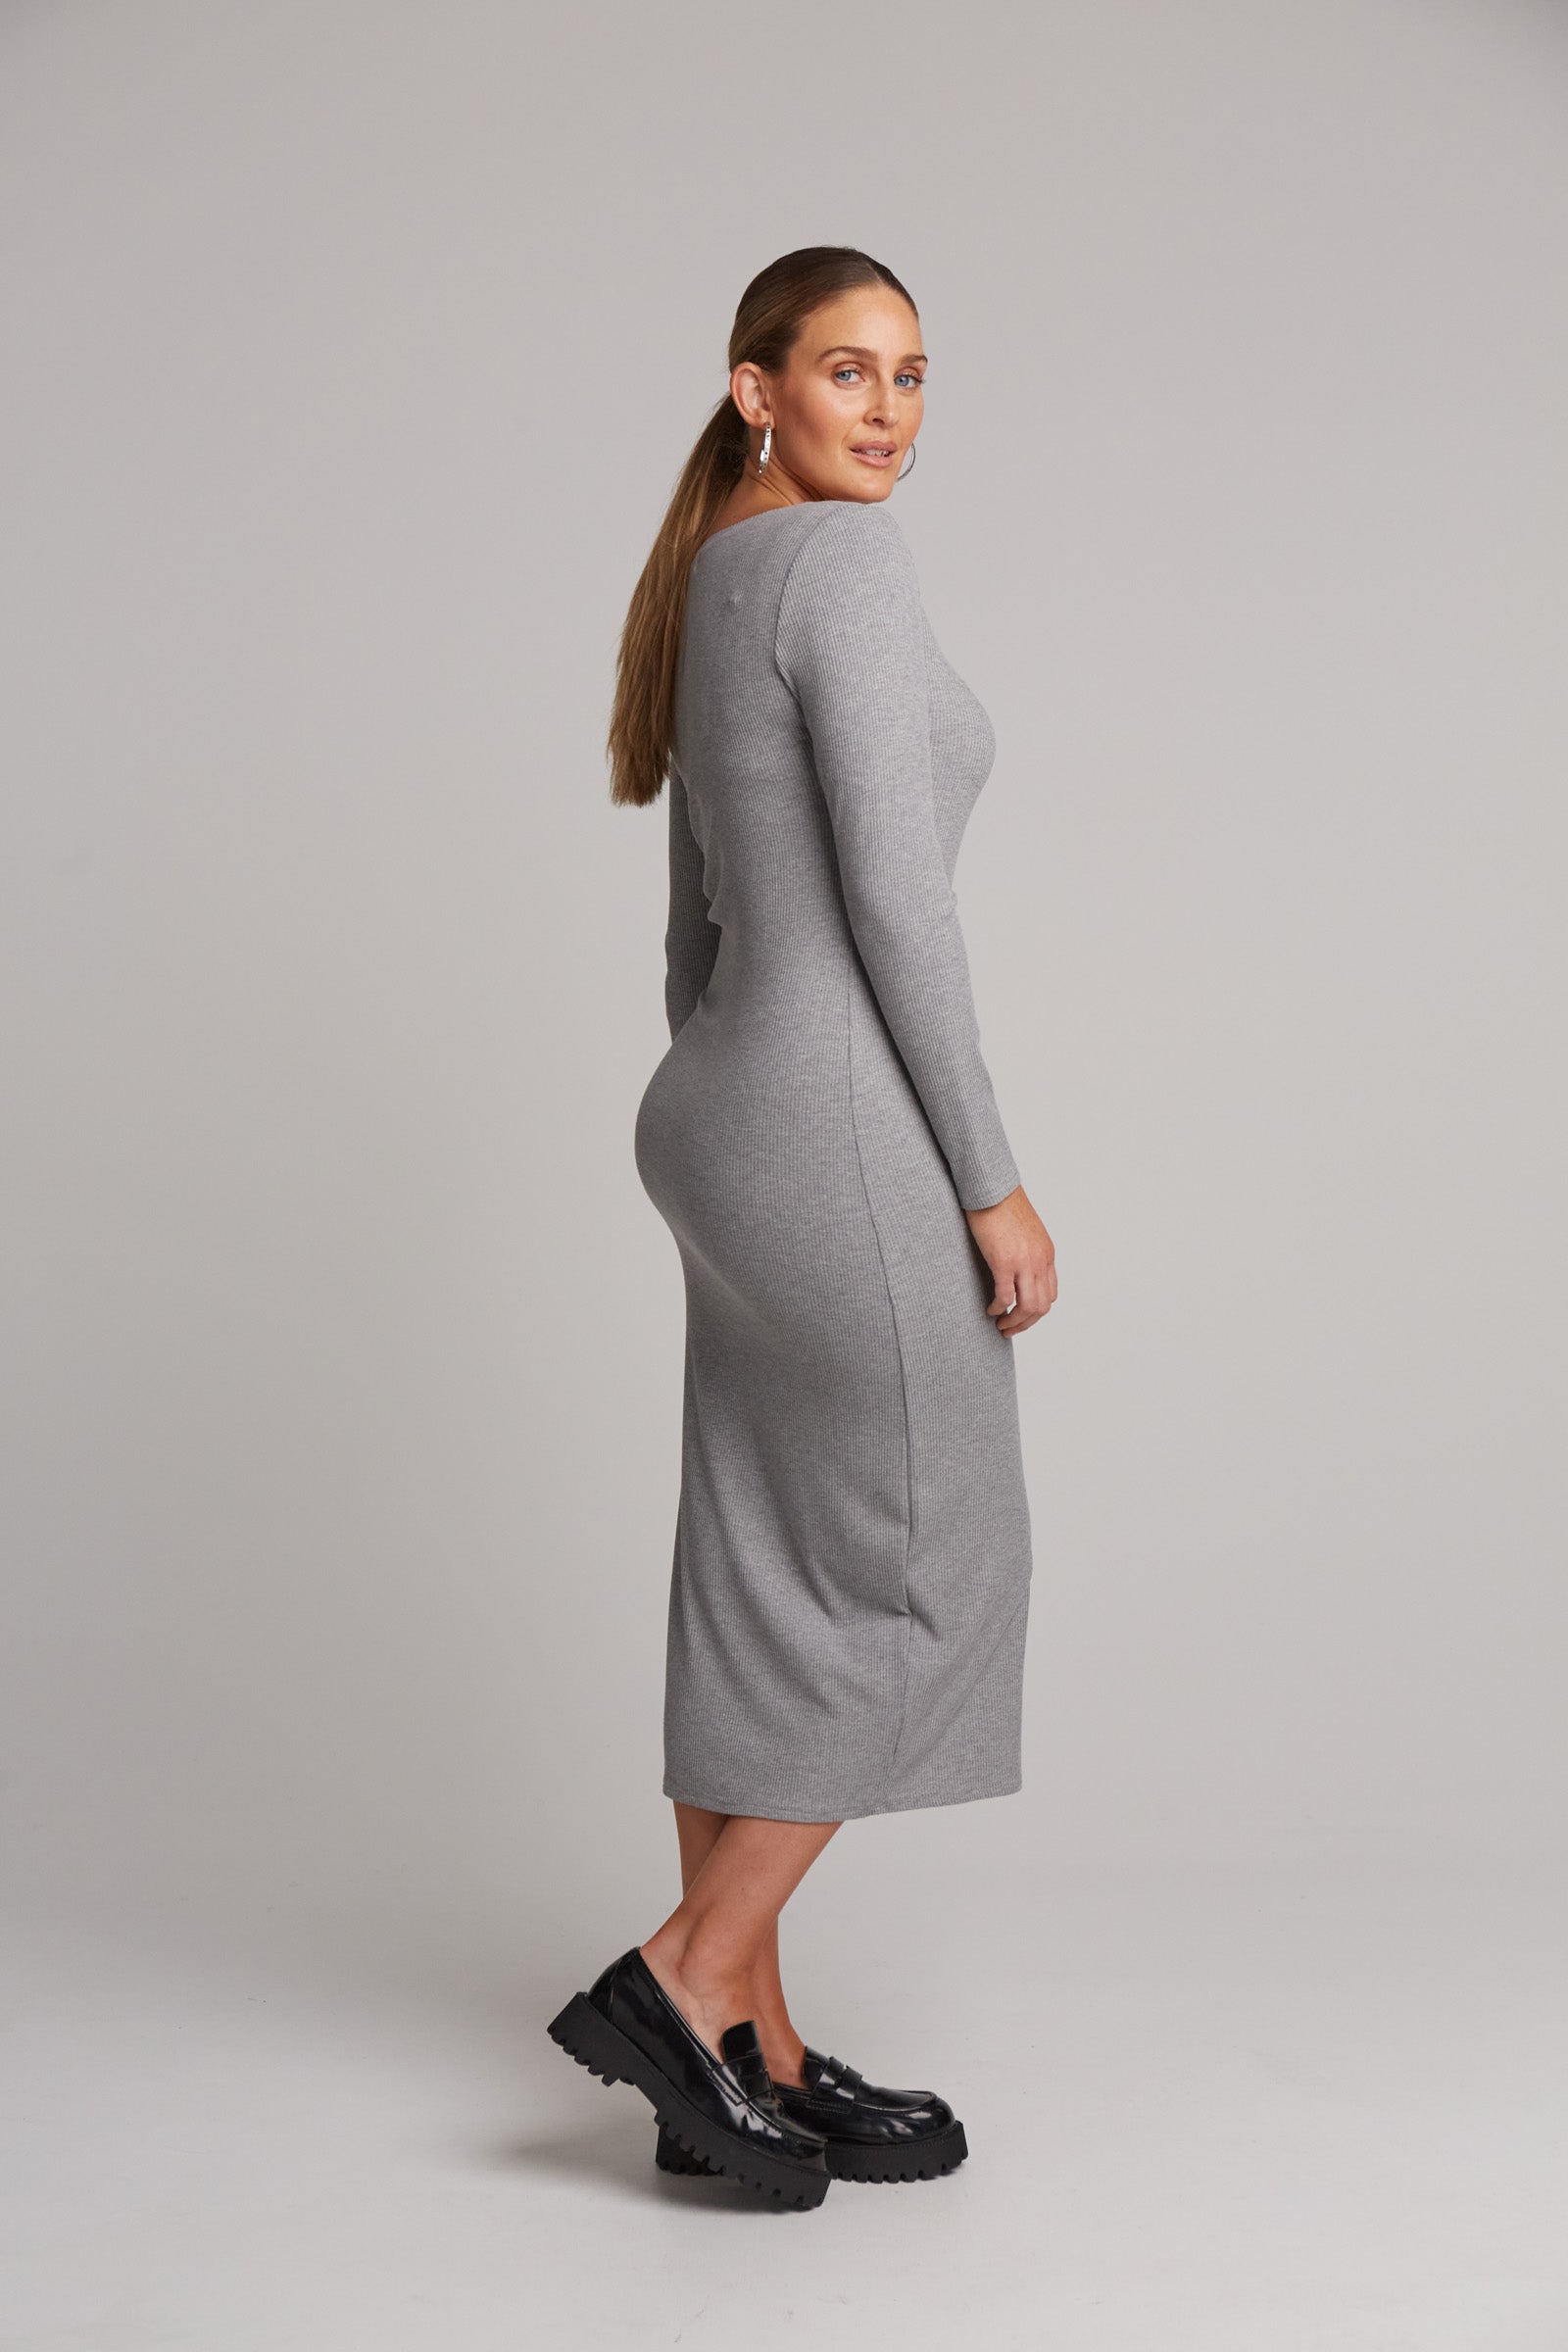 Studio Jersey Maxi - Gray - eb&ive Clothing - Dress Maxi